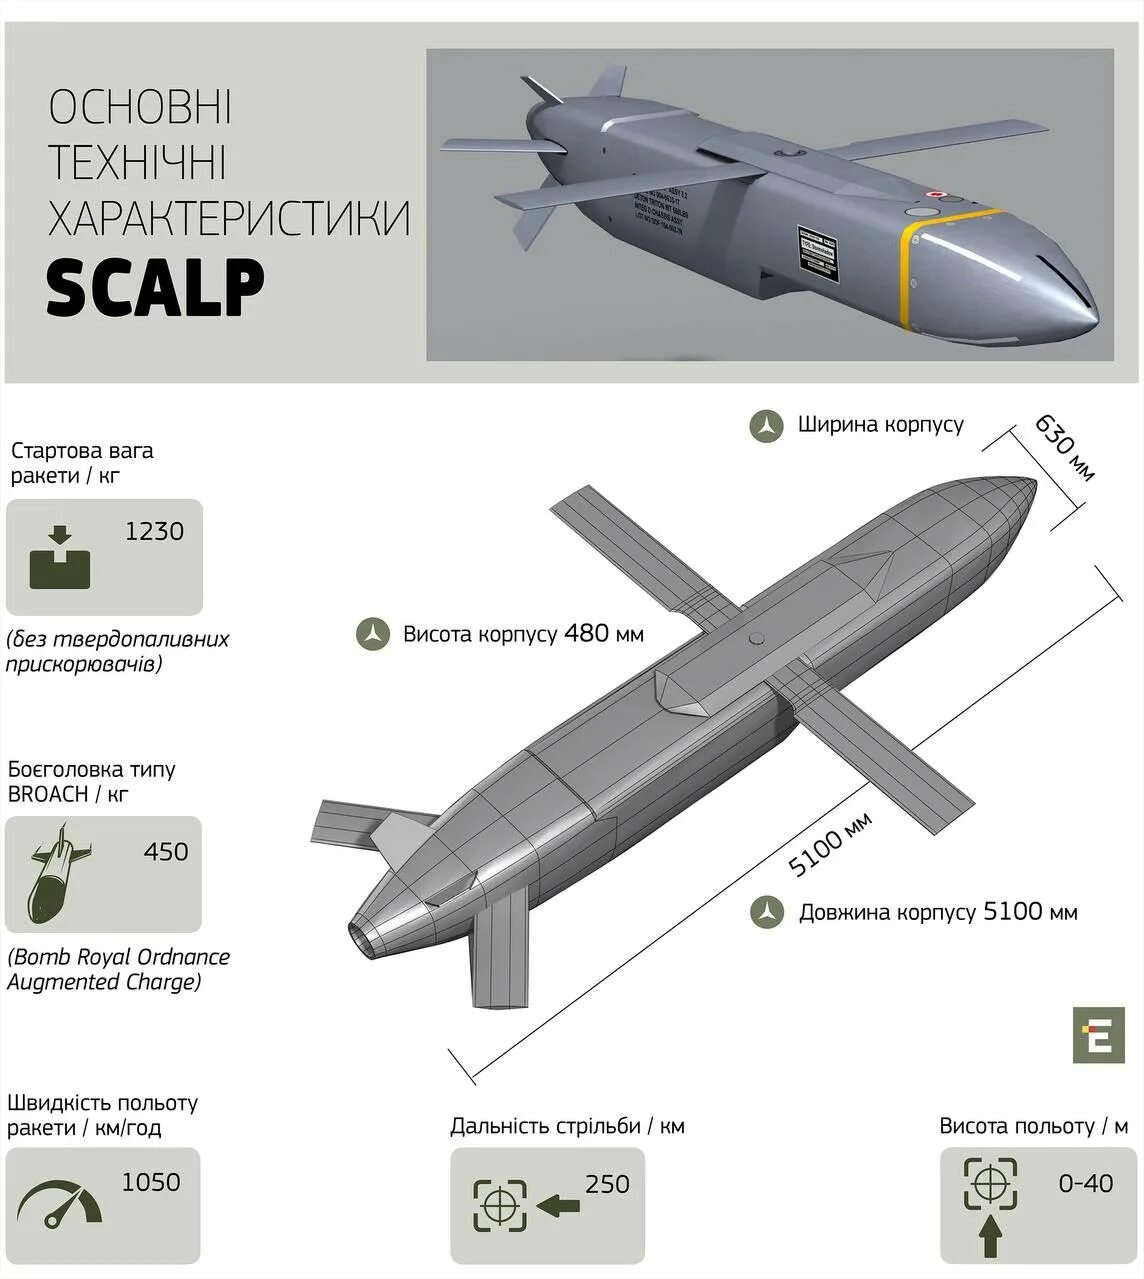 Крылатая ракета Scalp Naval. Ракета Scalp EG. Ракеты Scalp EG характеристики. Скальп ракета Крылатая. Крылатые ракеты scalp